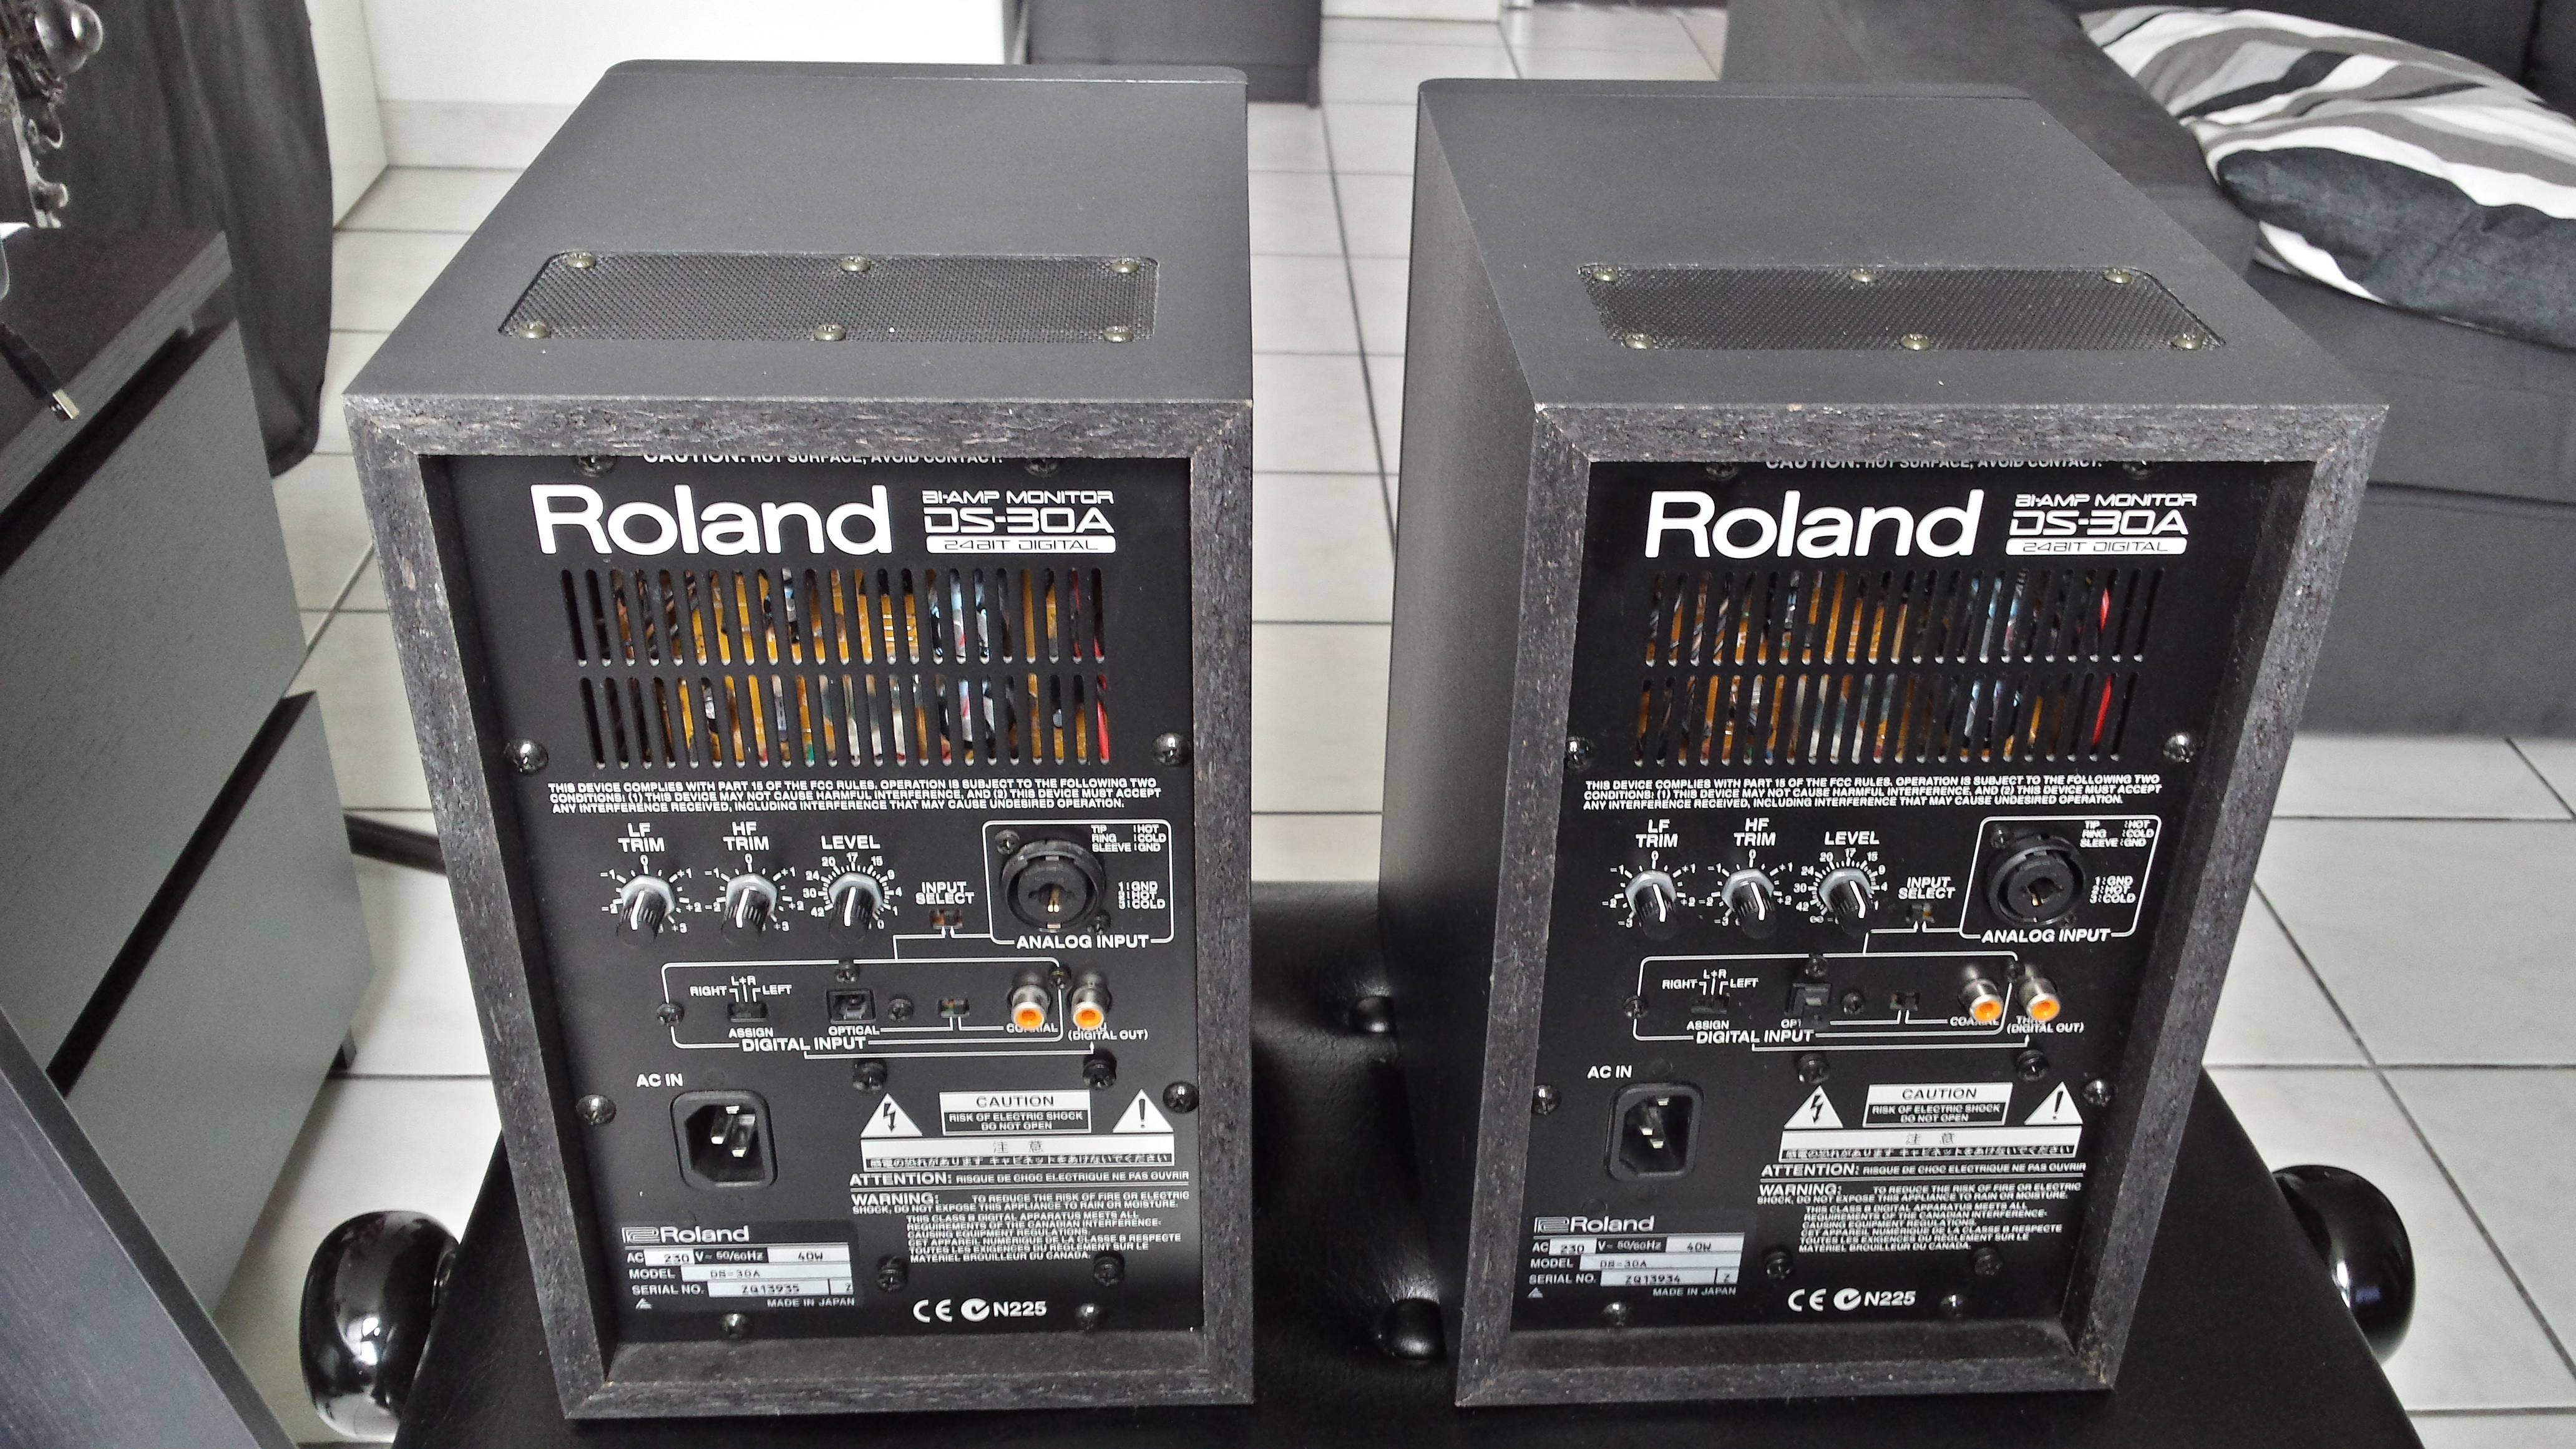 Roland DS-30A image (#858964) - Audiofanzine